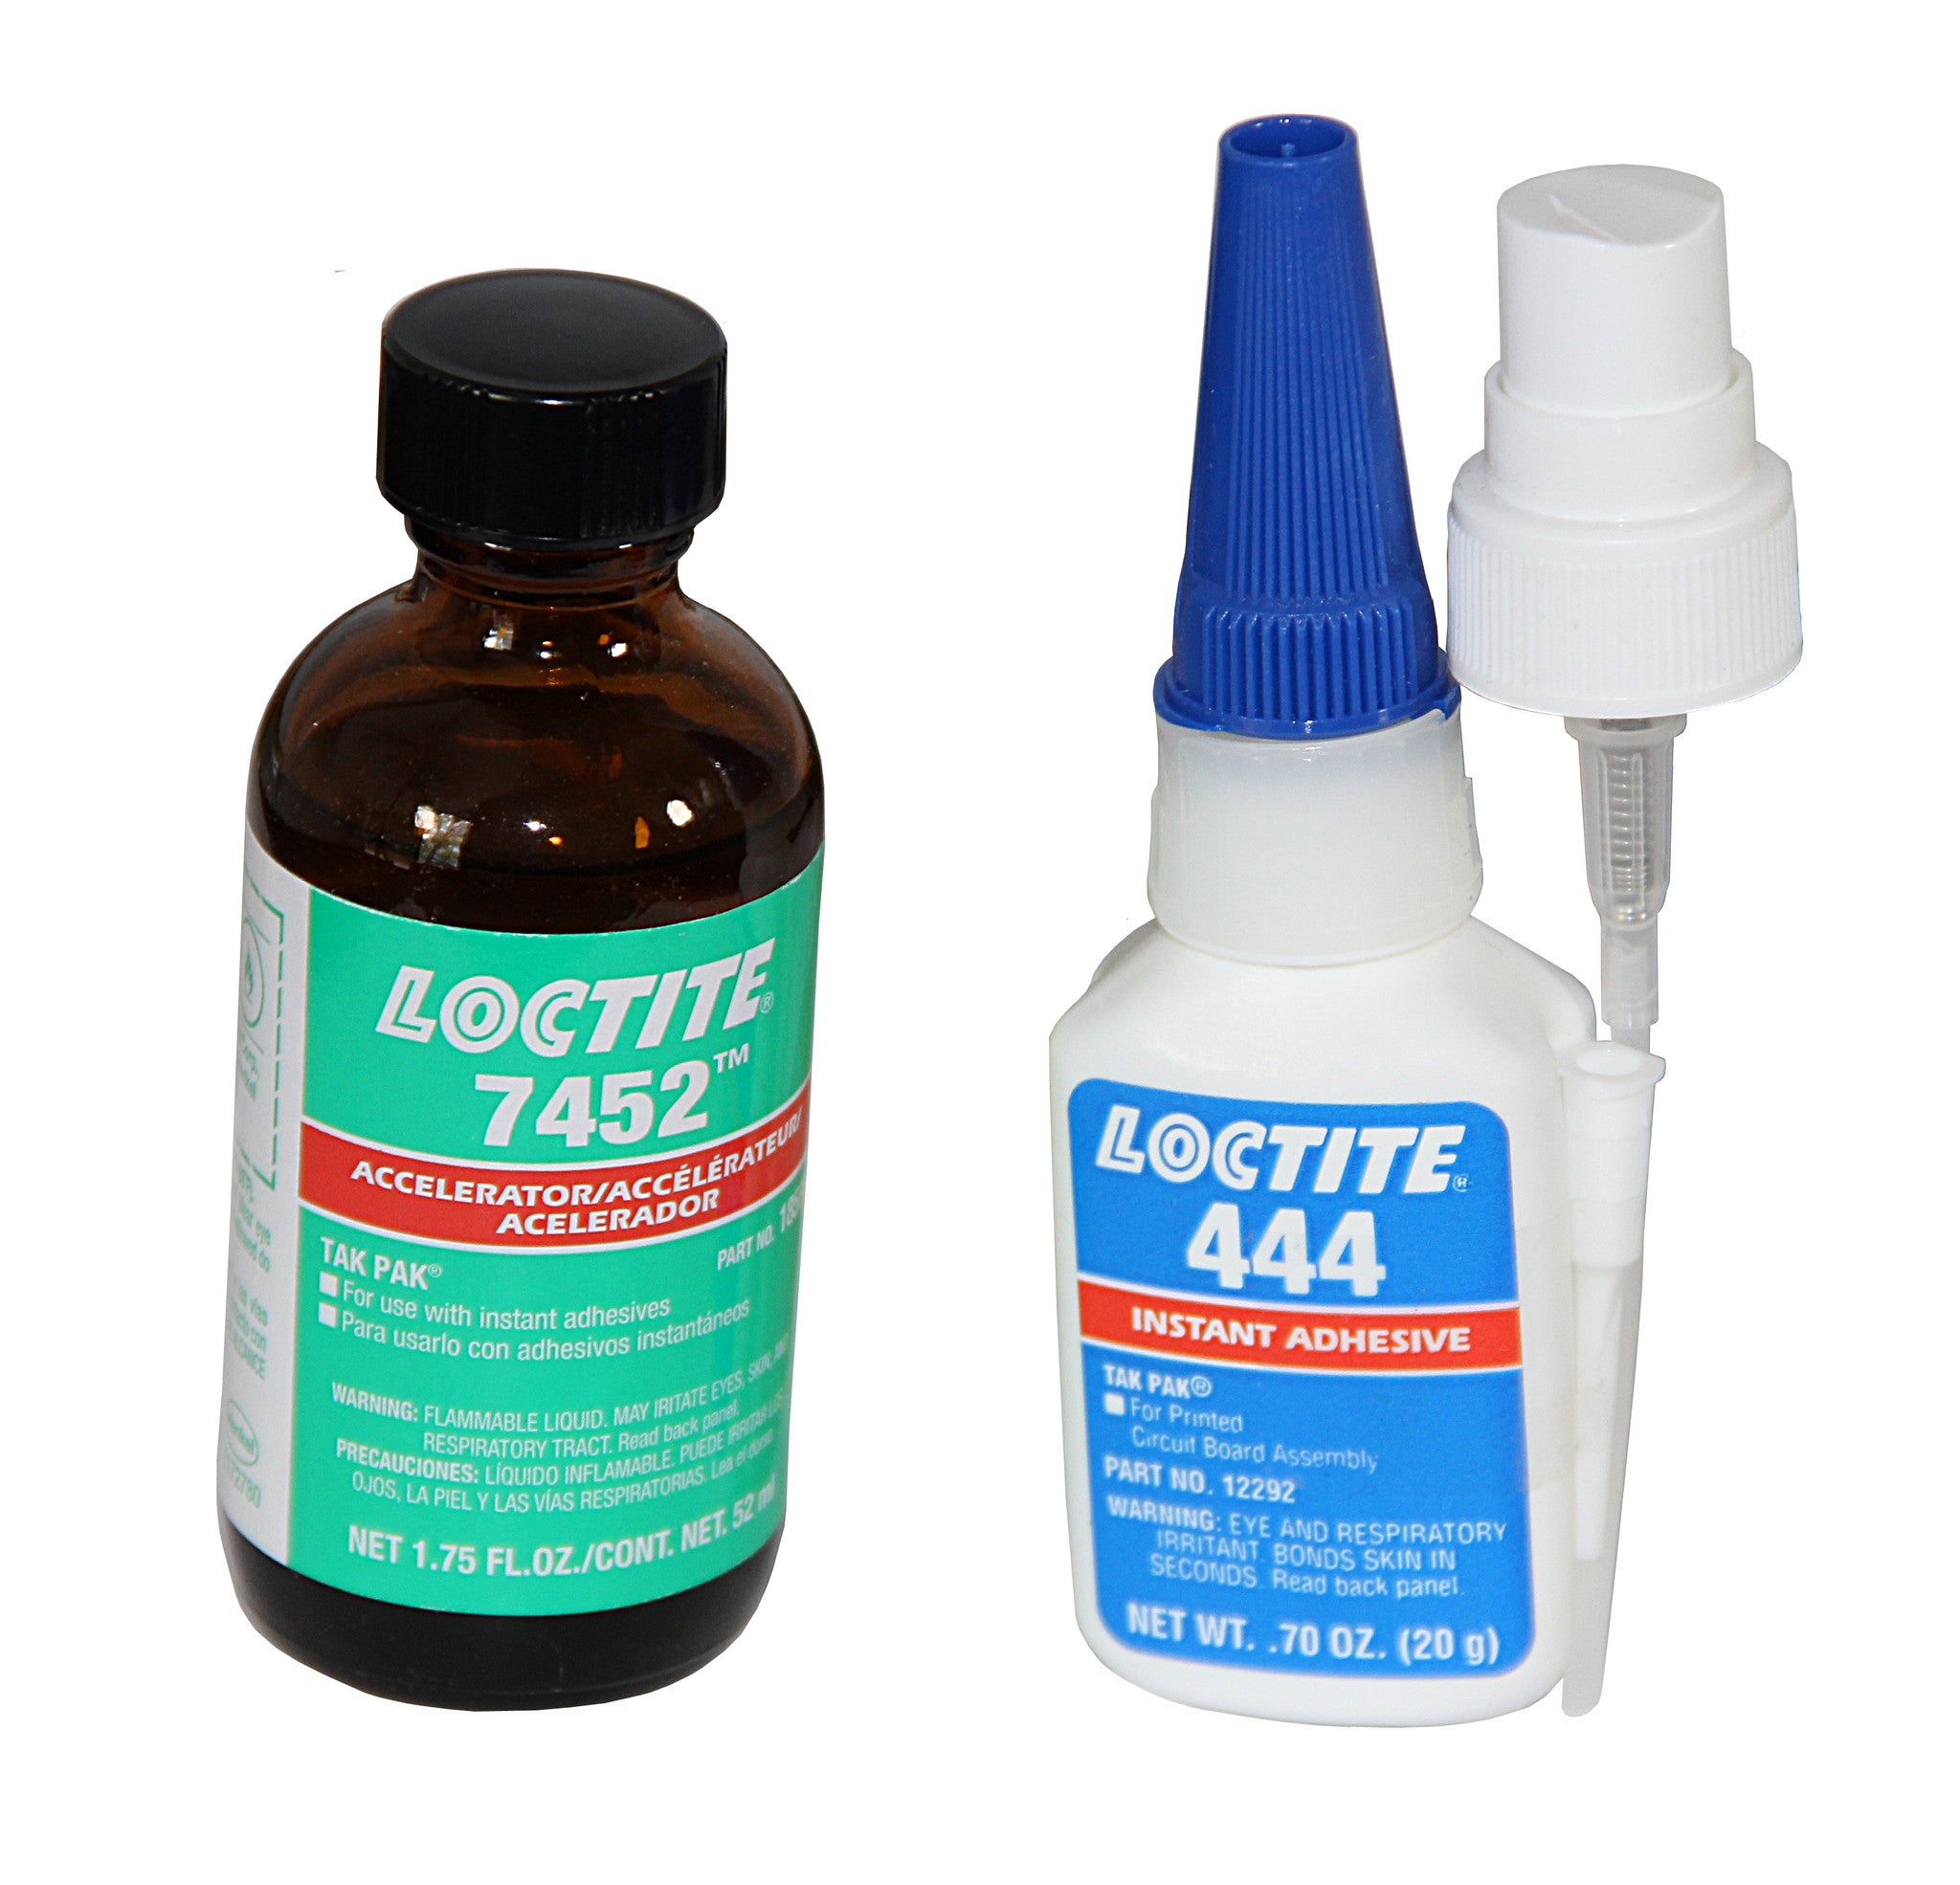 LOCTITE+ACCELERATOR, Surgical Glue And Accelerator